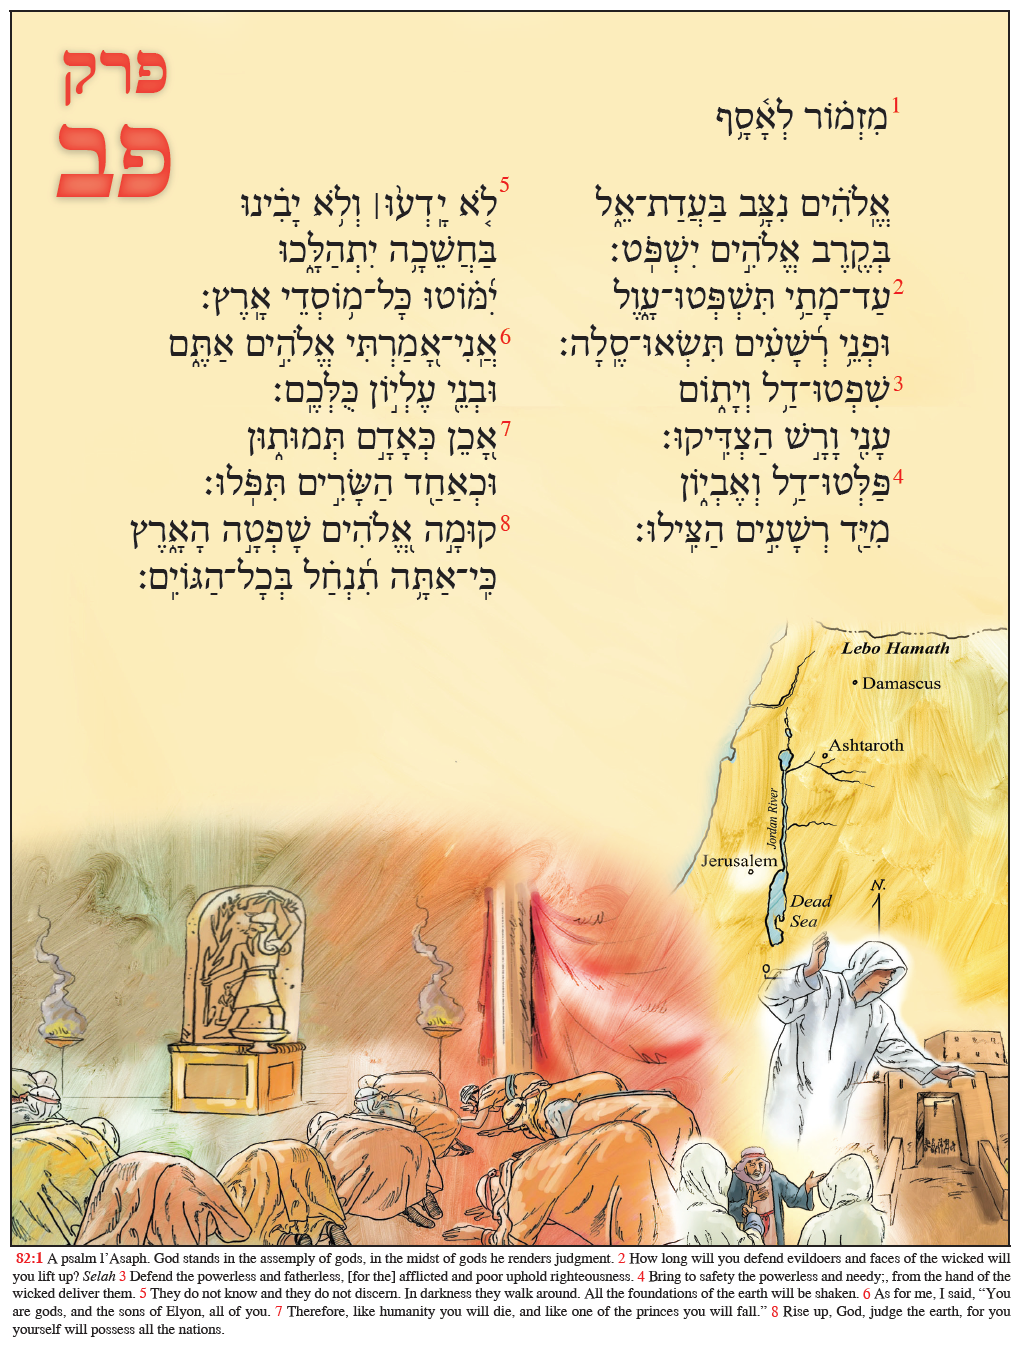 Illustrated Psalms 73–150 in Hebrew (ספרים ג־ה לתהלים)